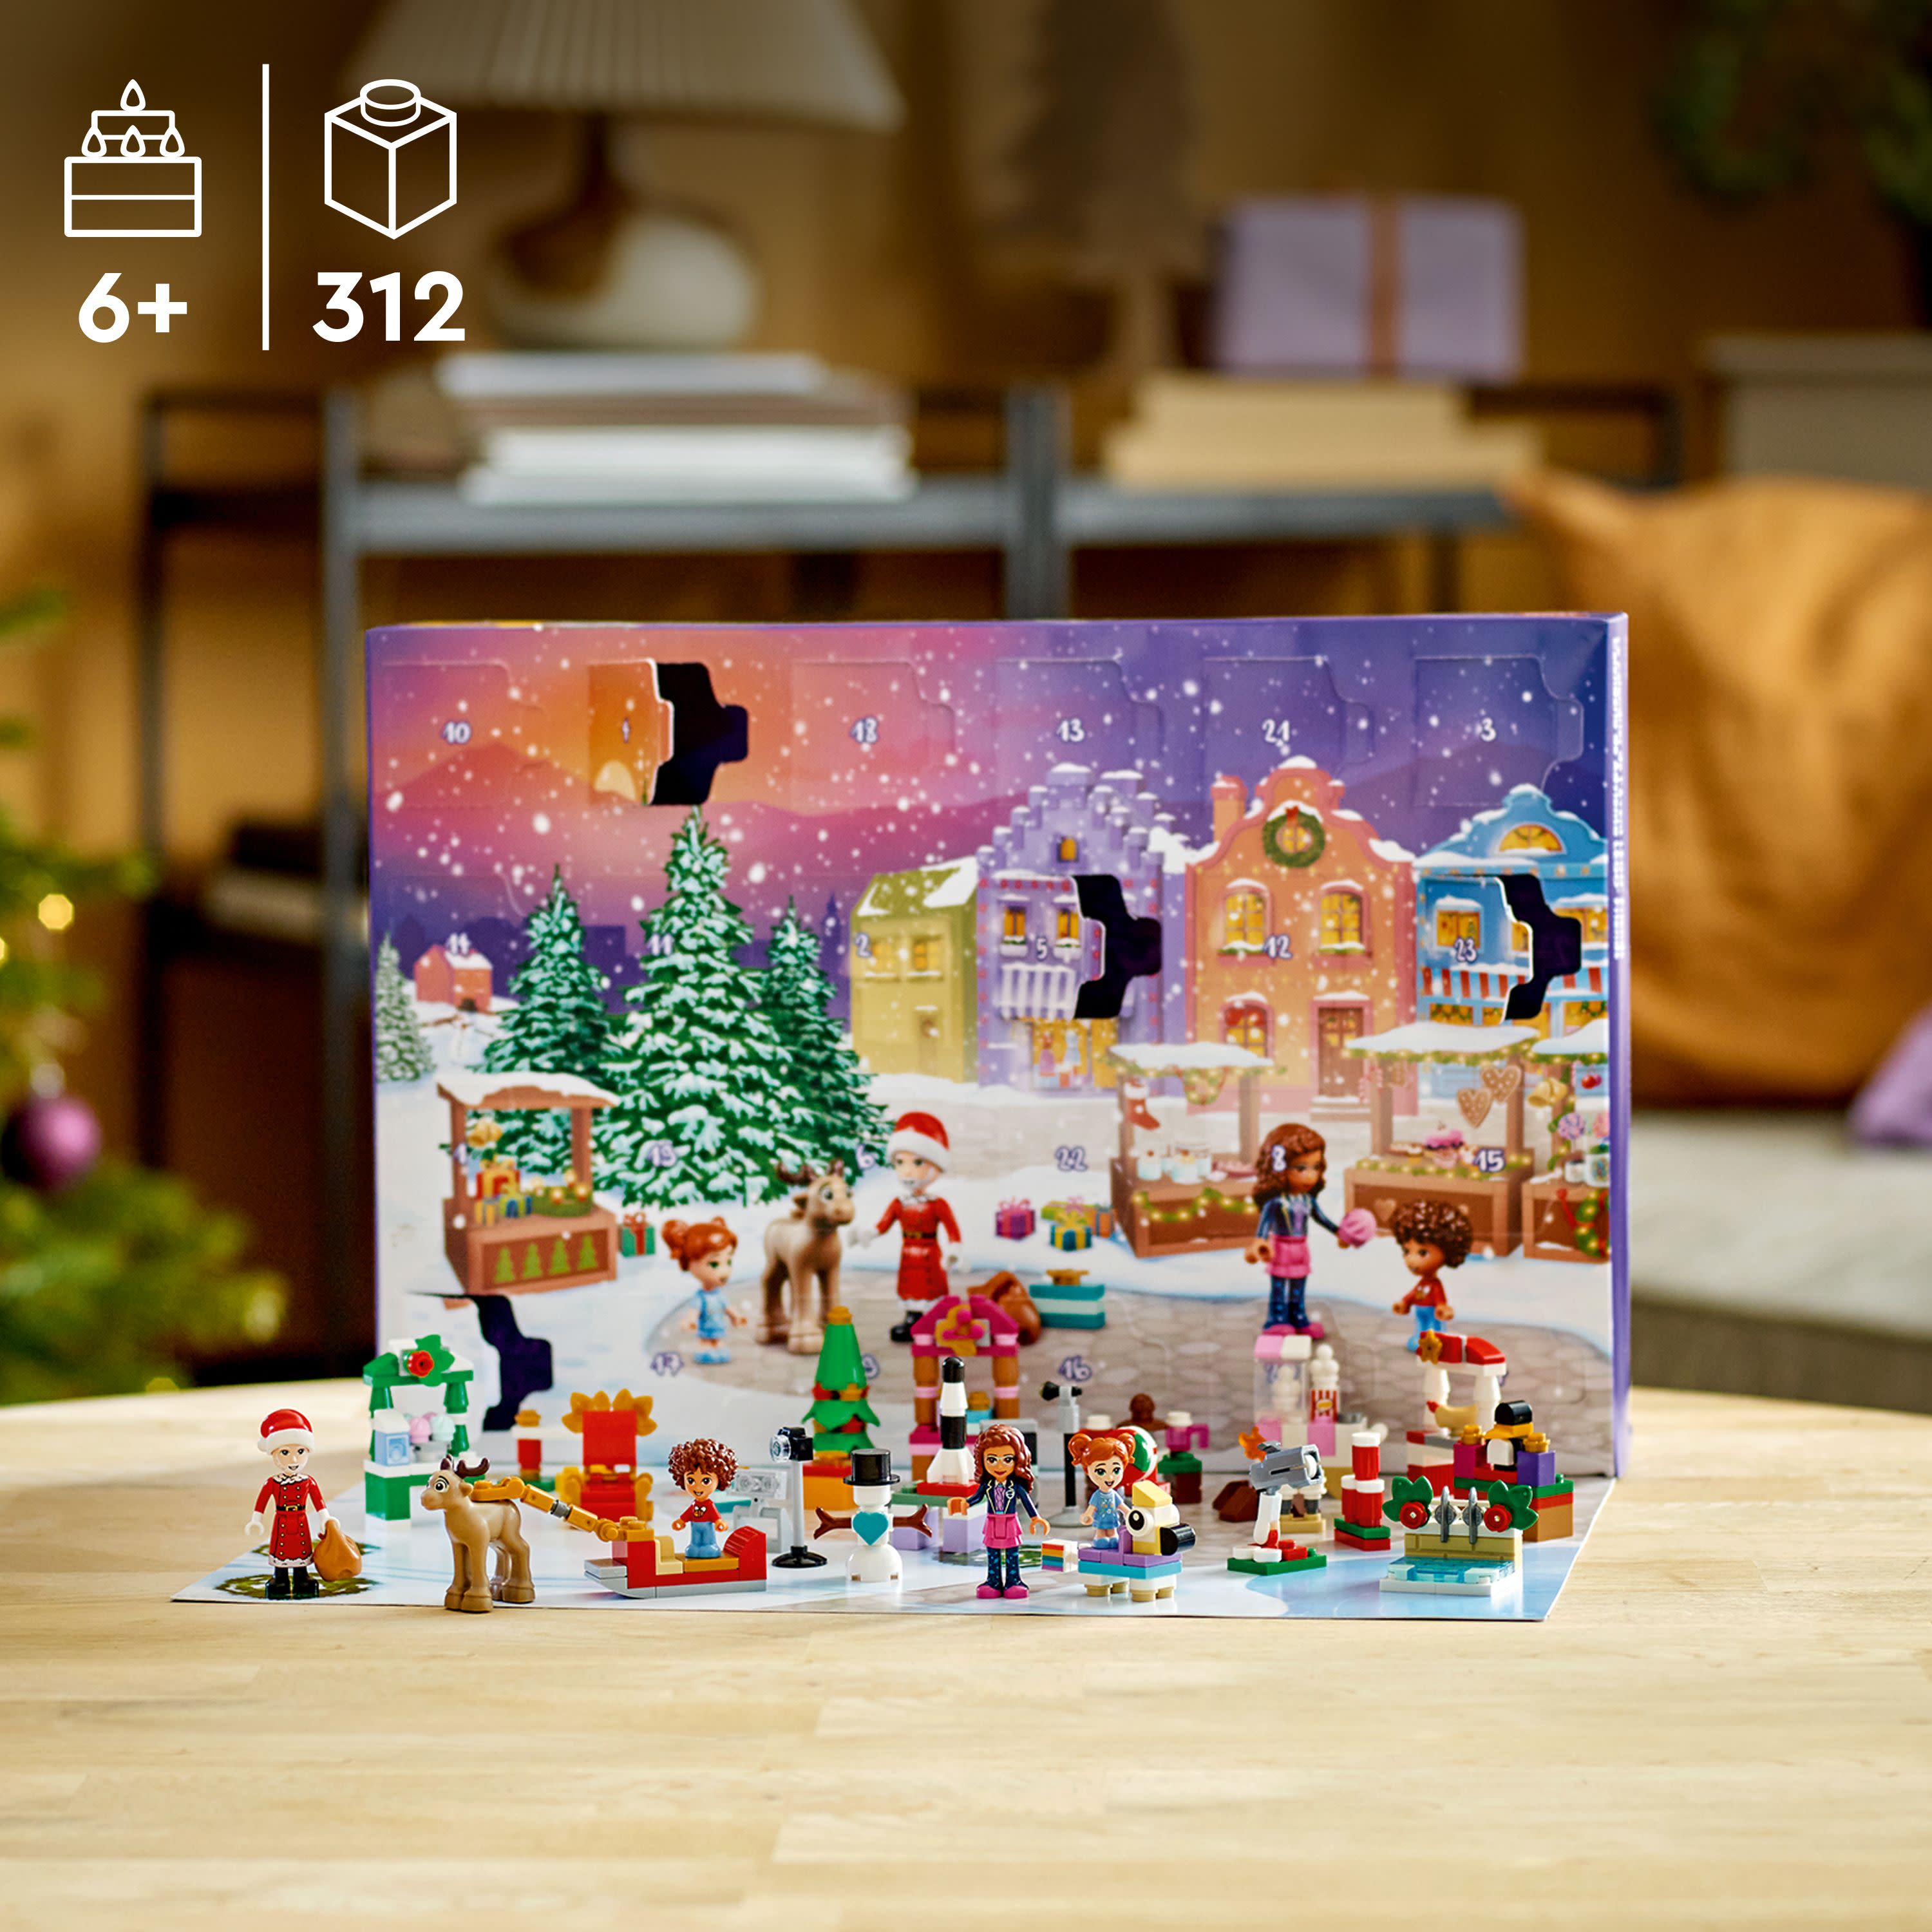 LEGO Friends 2022 Advent Calendar 41706 Building Toy Set (312 Pieces) - image 3 of 7